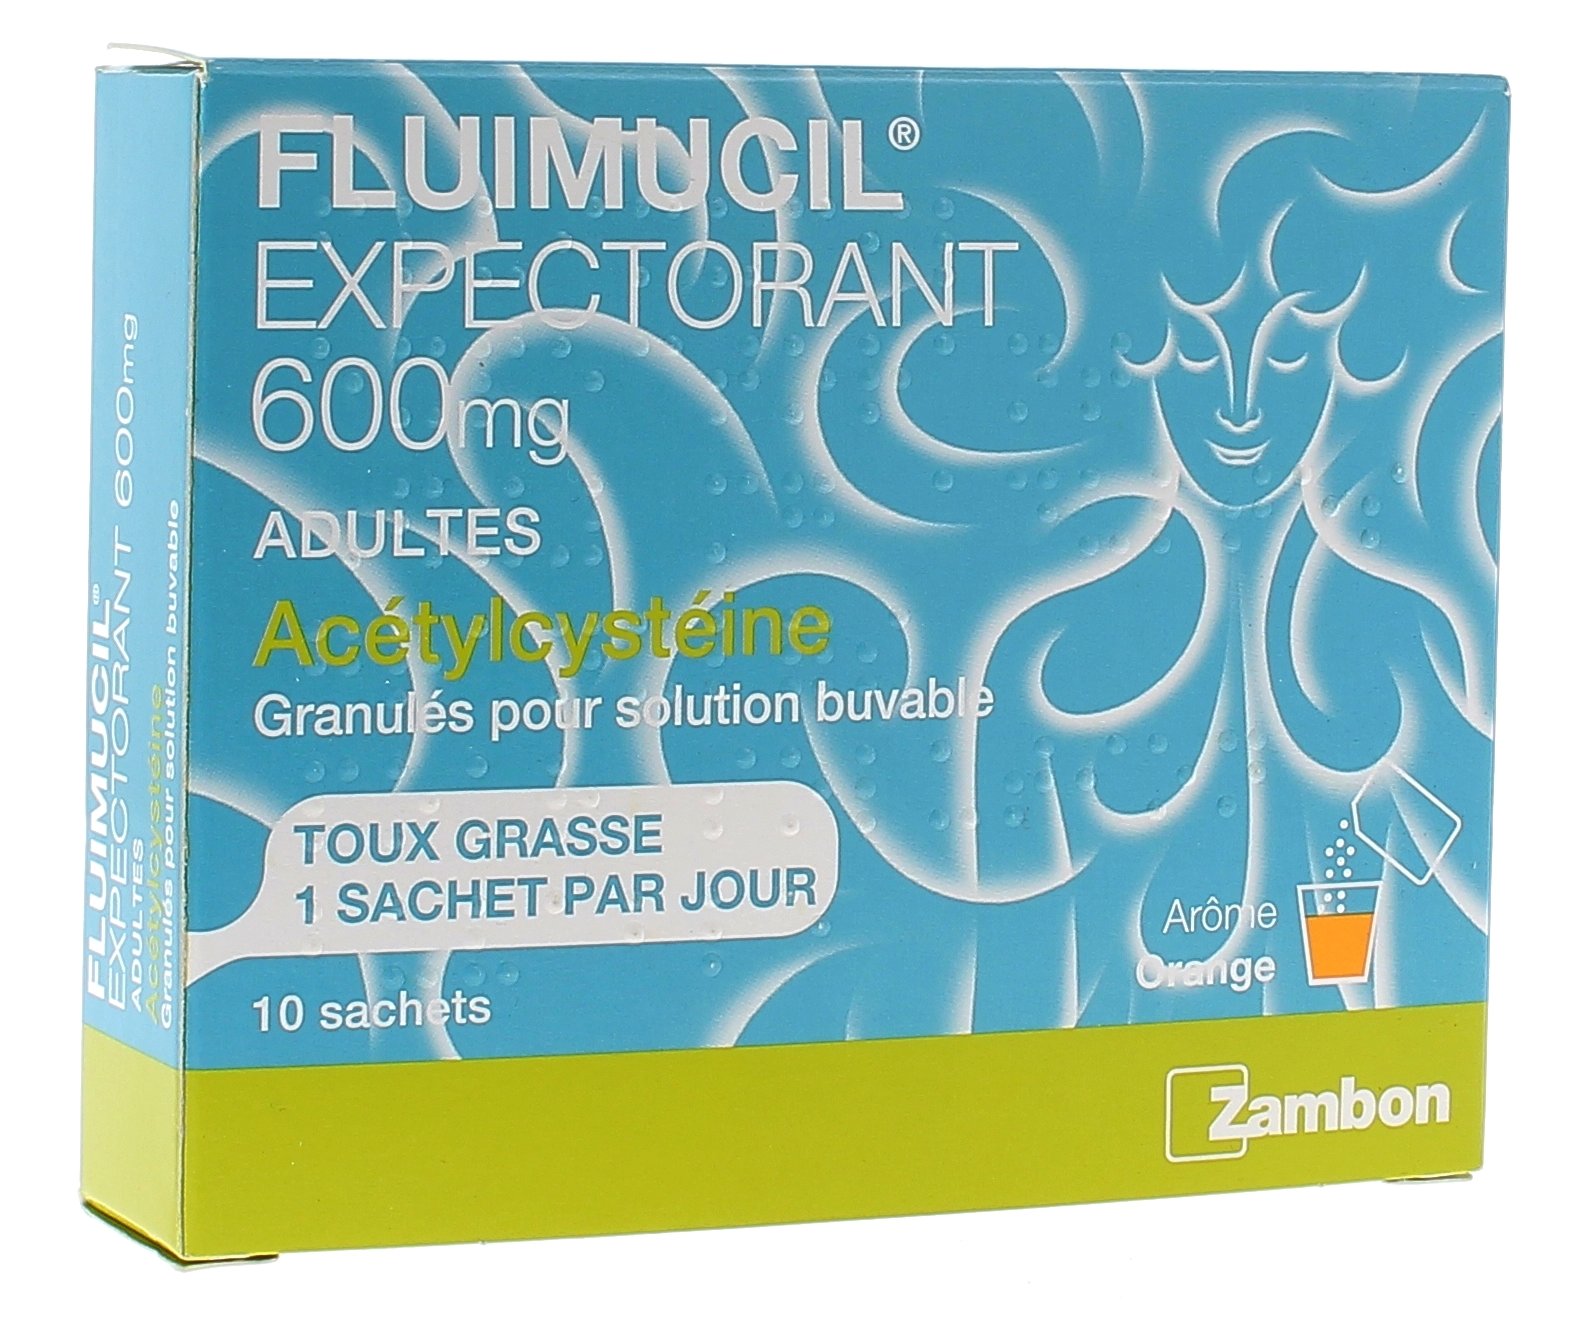 Fluimucil expectorant 600 mg toux grasse Zambon - 10 sachets arôme orange